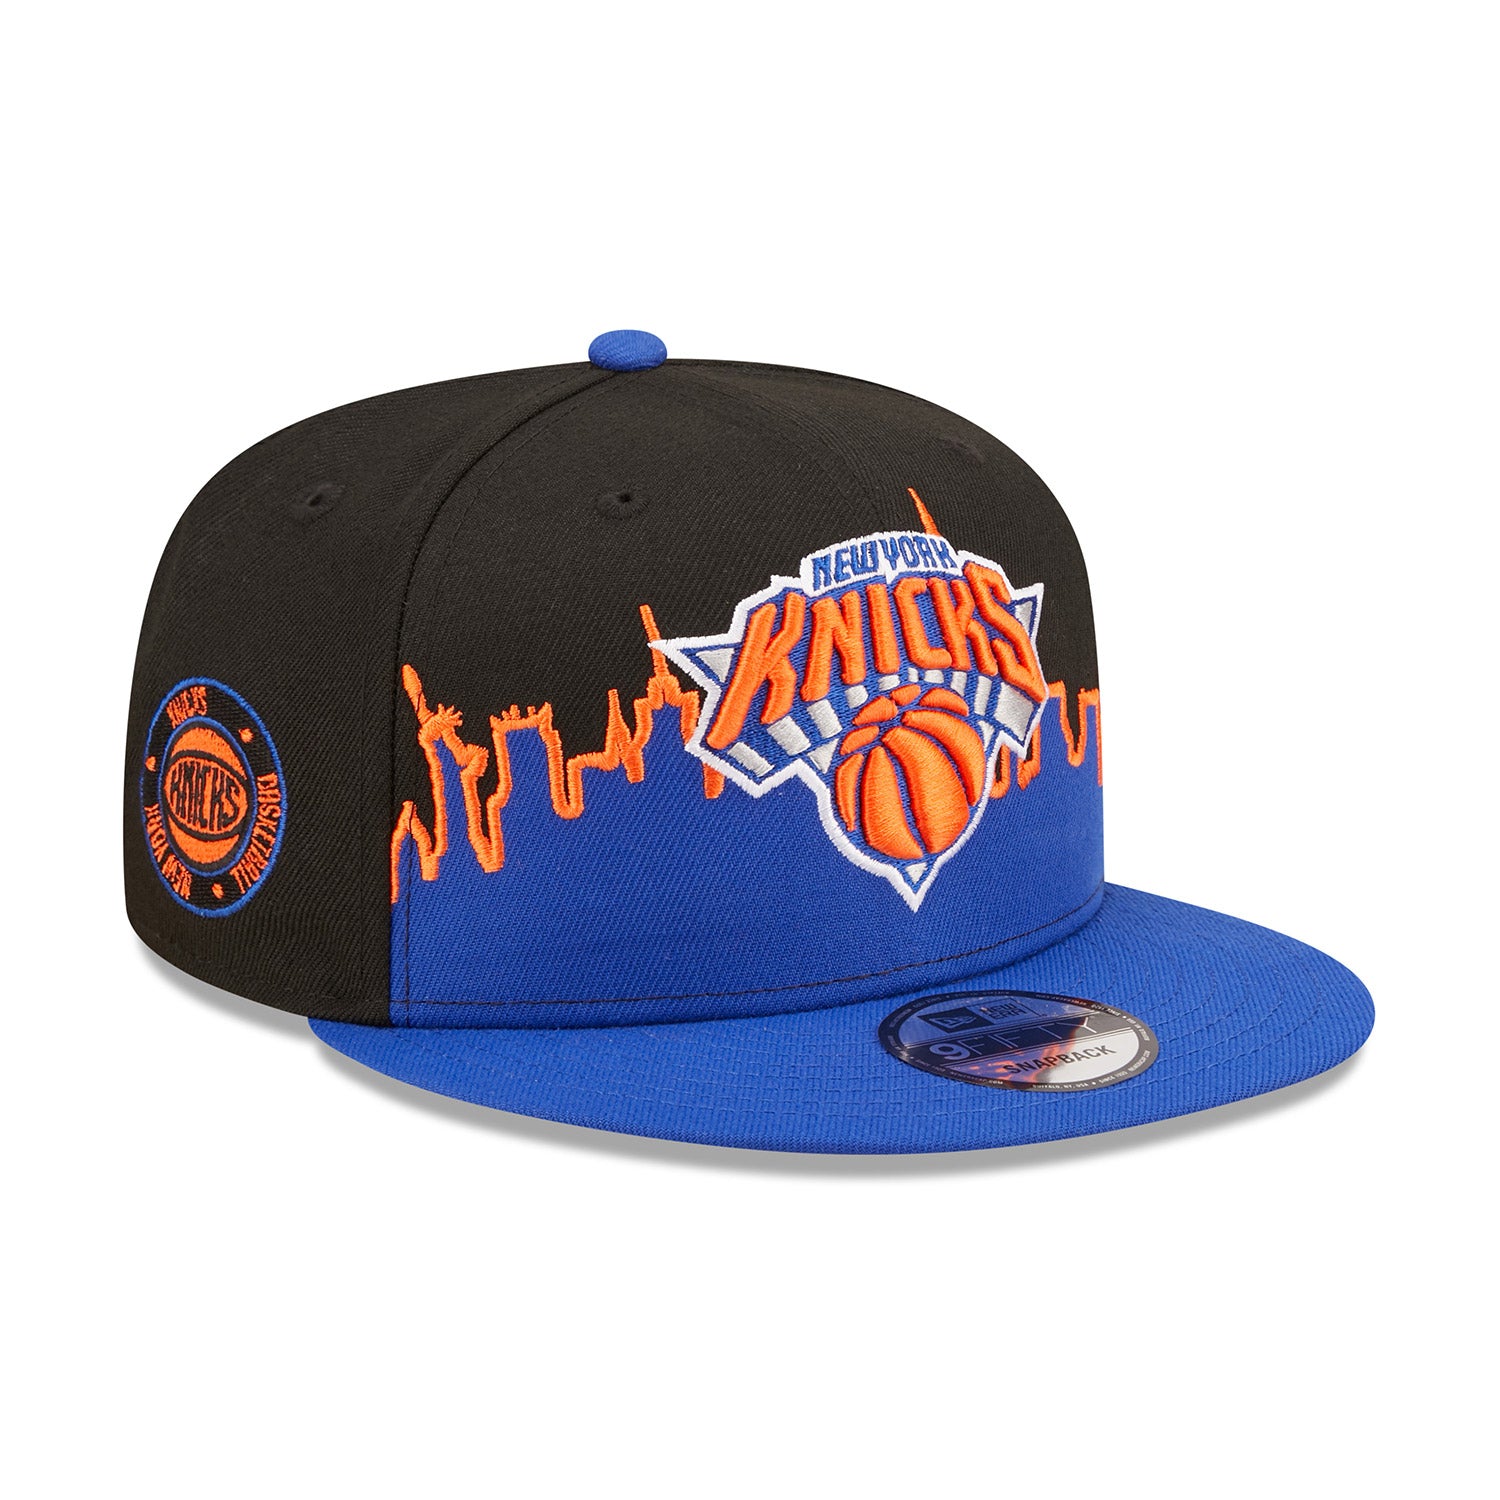 New Era Knicks Skyline Tip Off Fitted Hat